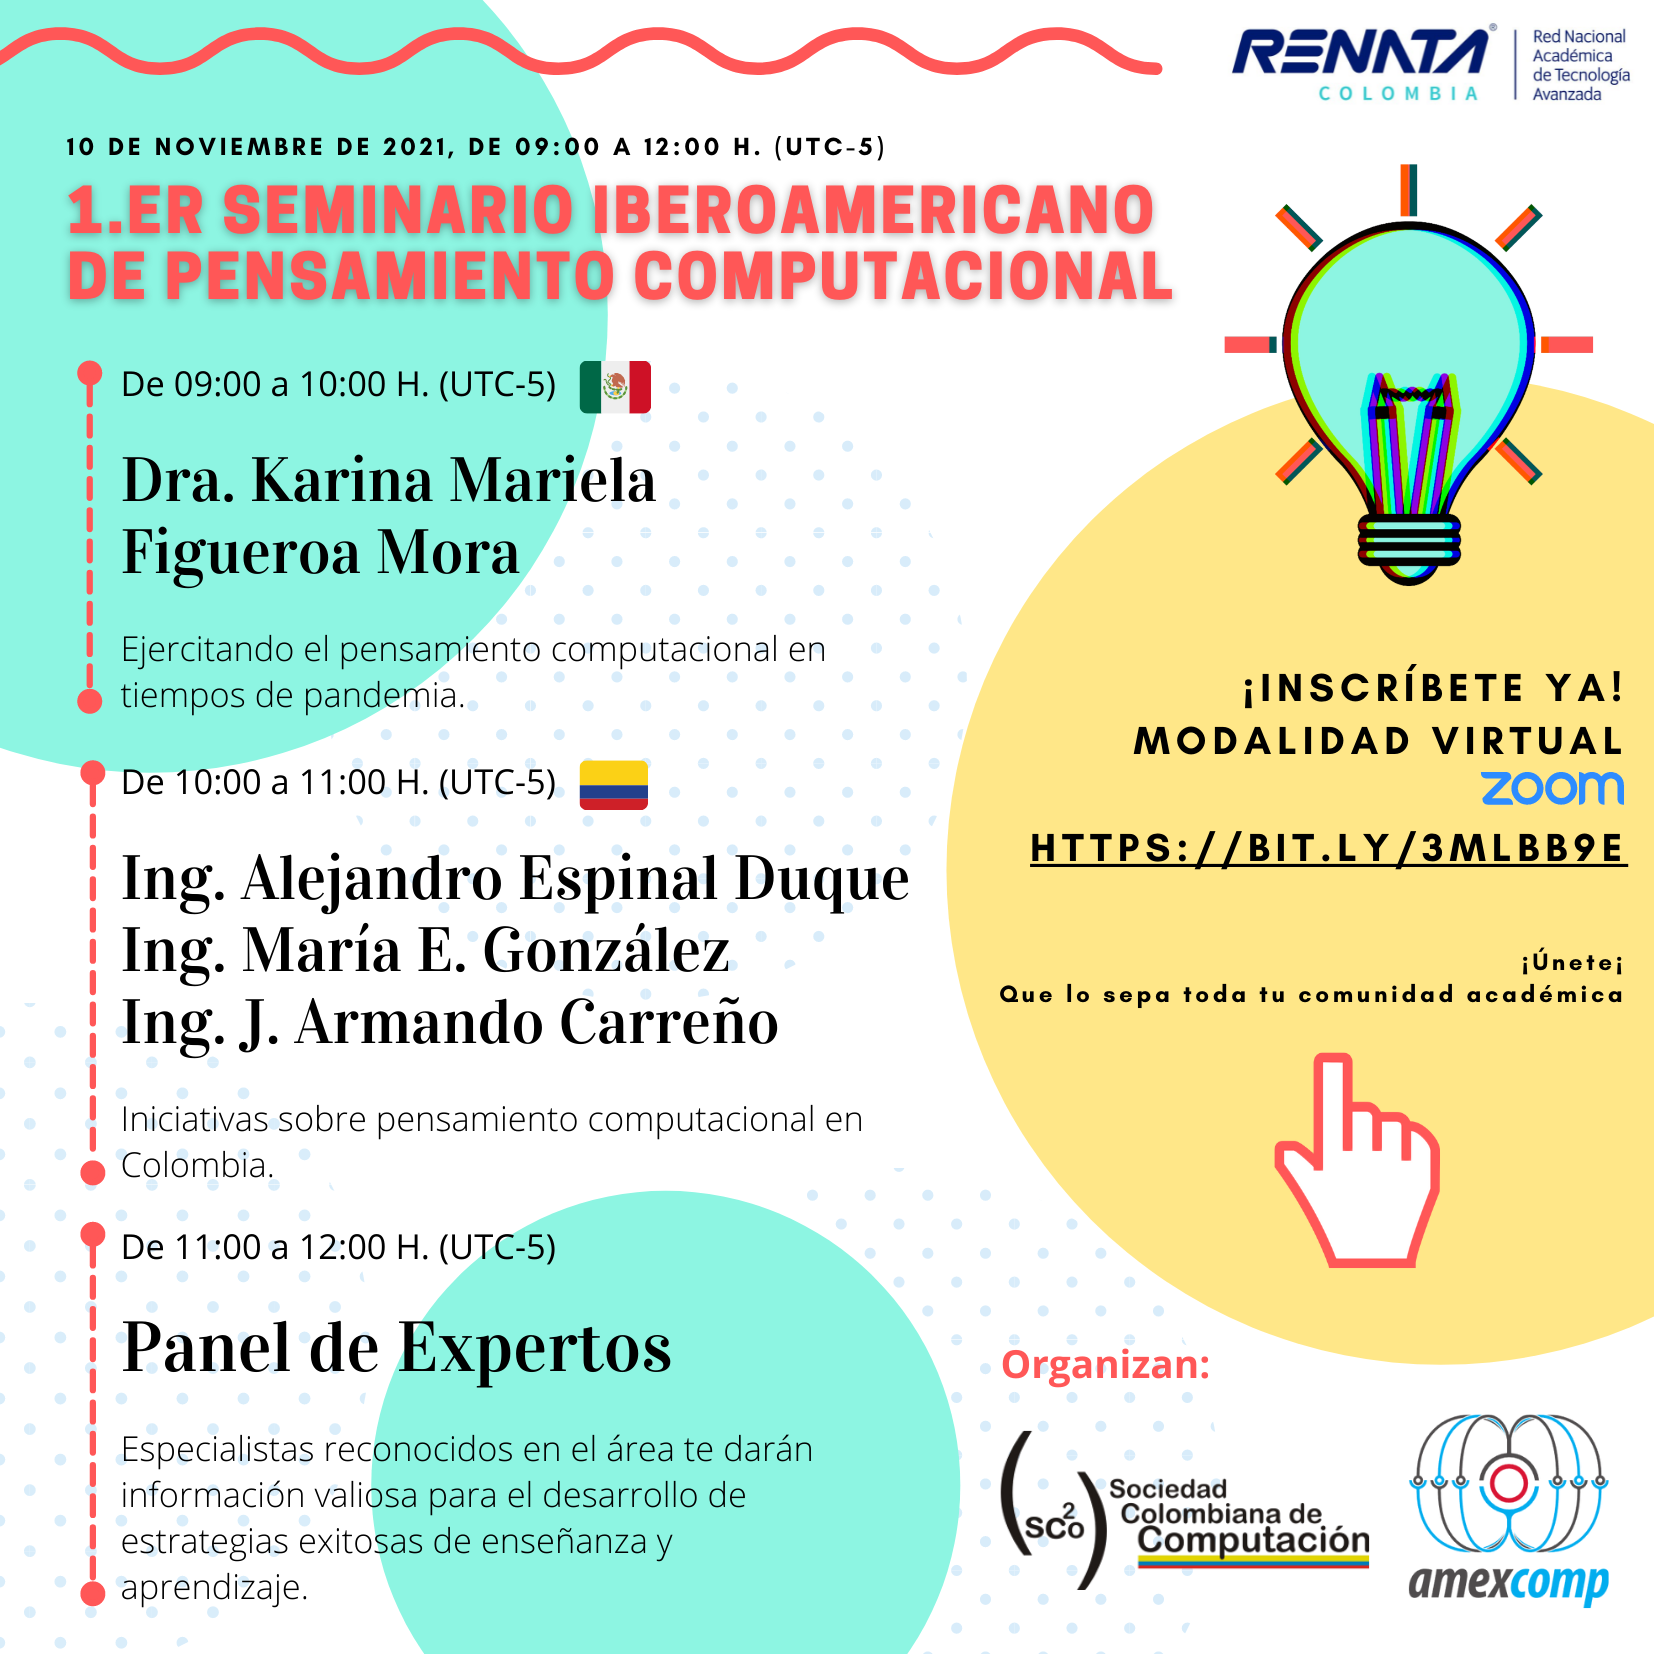 1.er Seminario Iberoamericano de Pensamiento Computacional